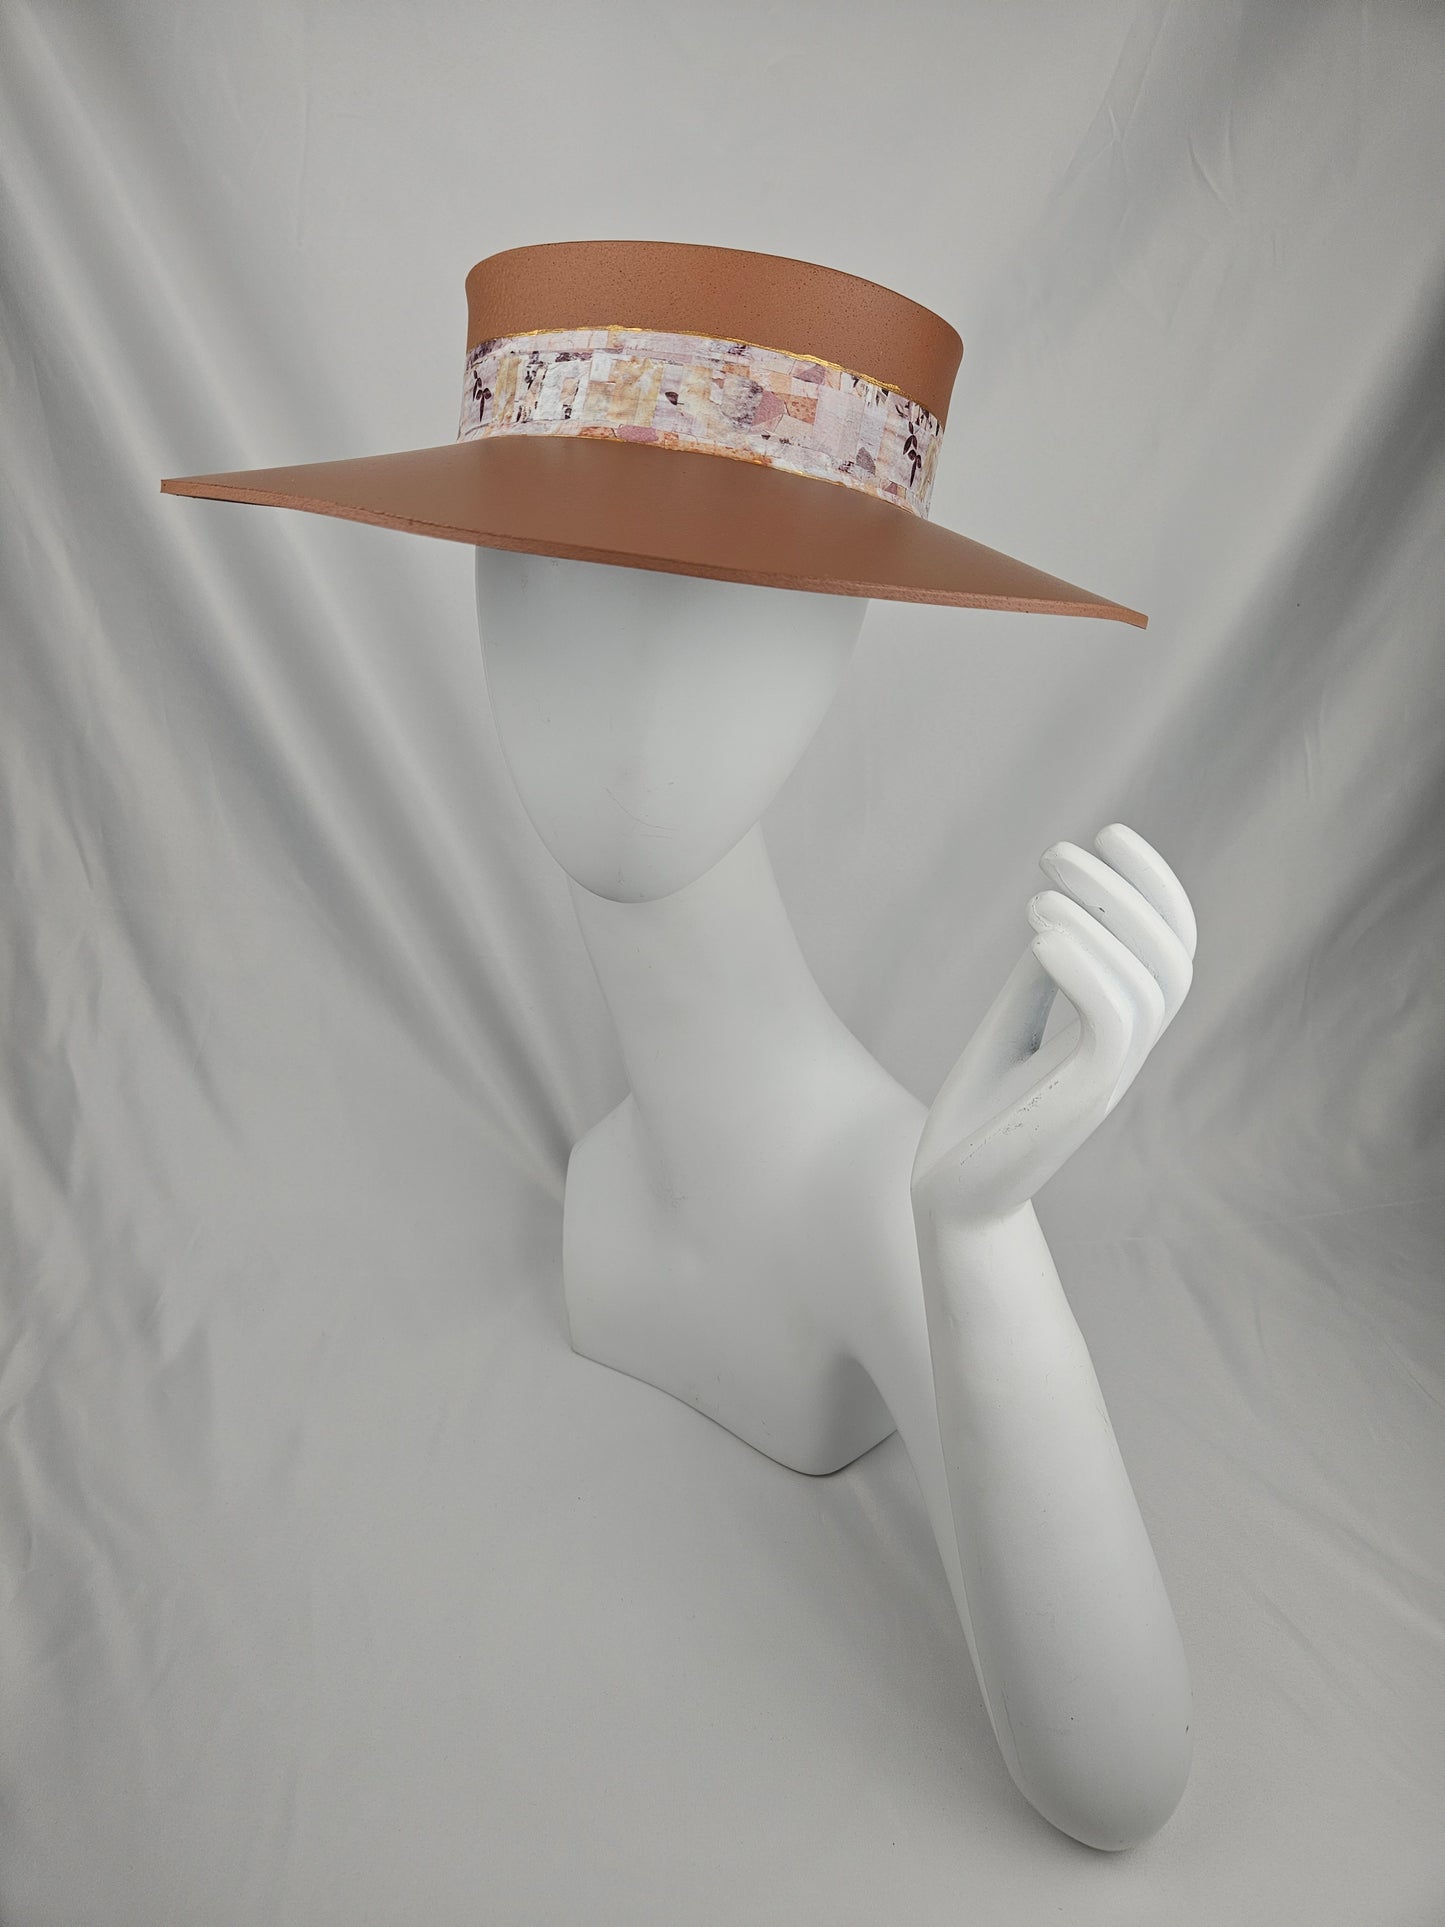 Caramel Brown Audrey Sun Visor Hat with Lovely Botanical Themed Collage Band: UV Resistant, Walks, Brunch, Tea, Golf, Wedding, Church, No Headache, Easter, Pool, Beach, Big Brim